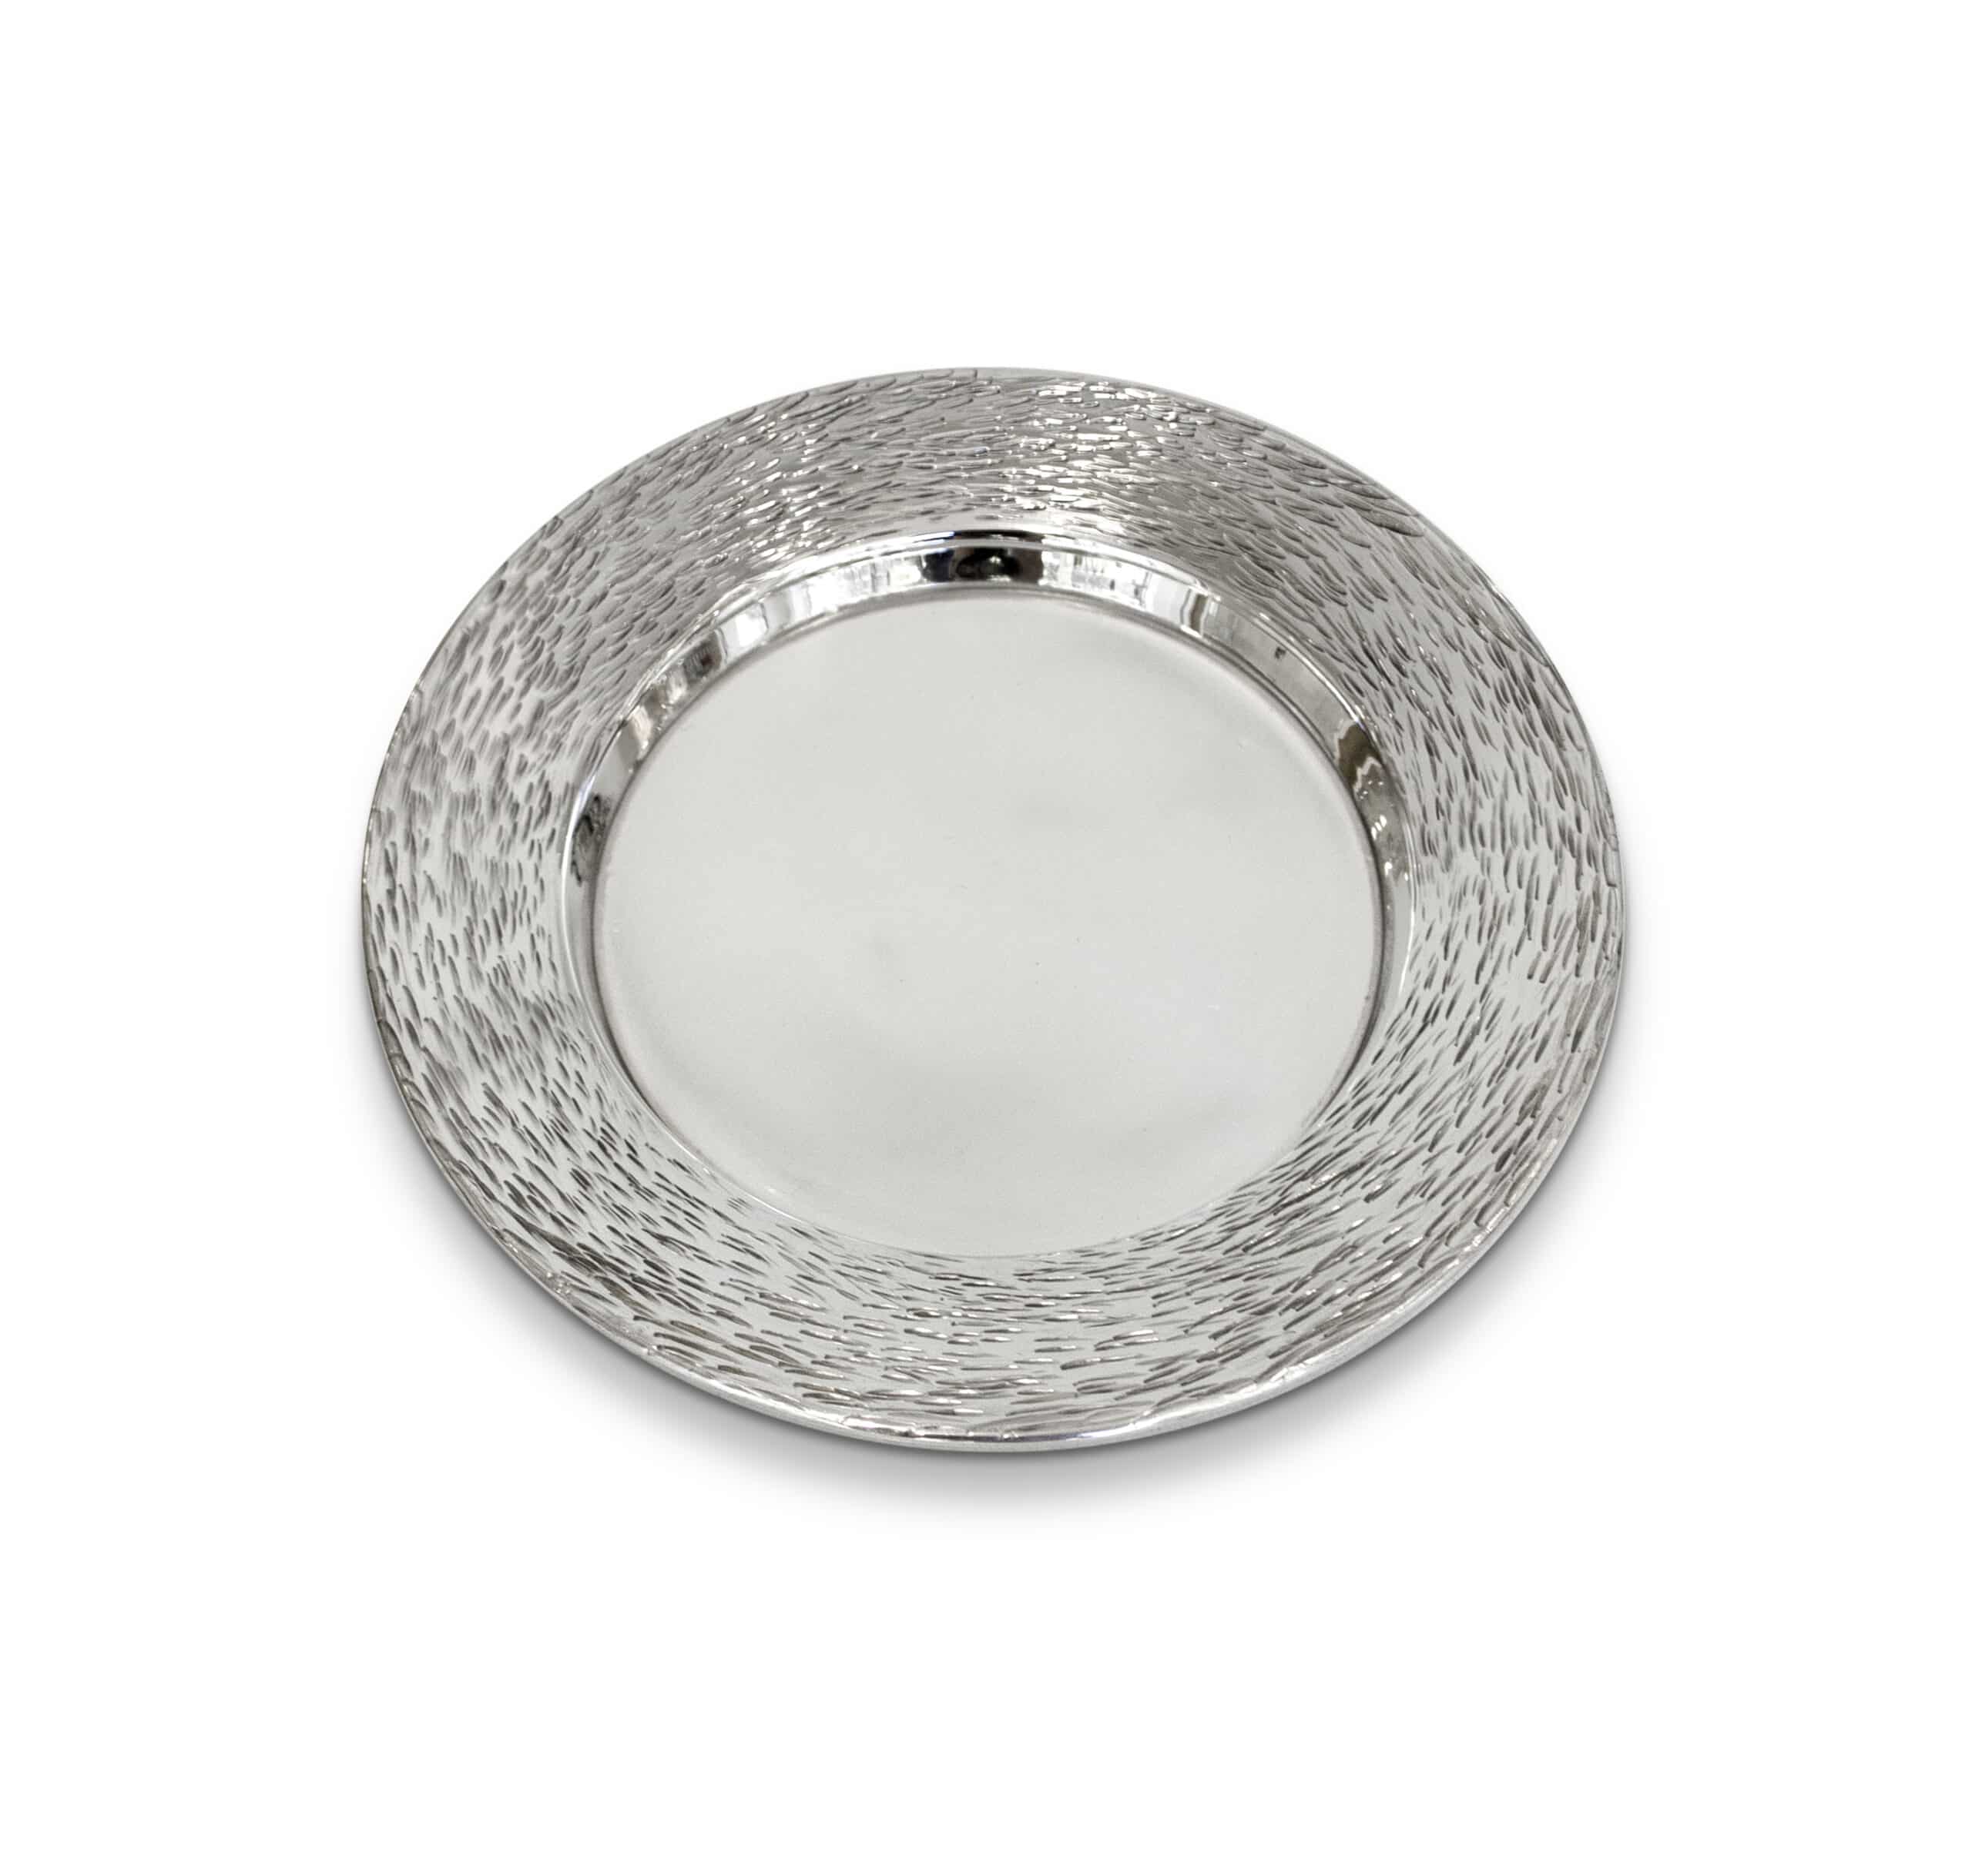 Unique Hammering Sterling Silver Kiddush Plate